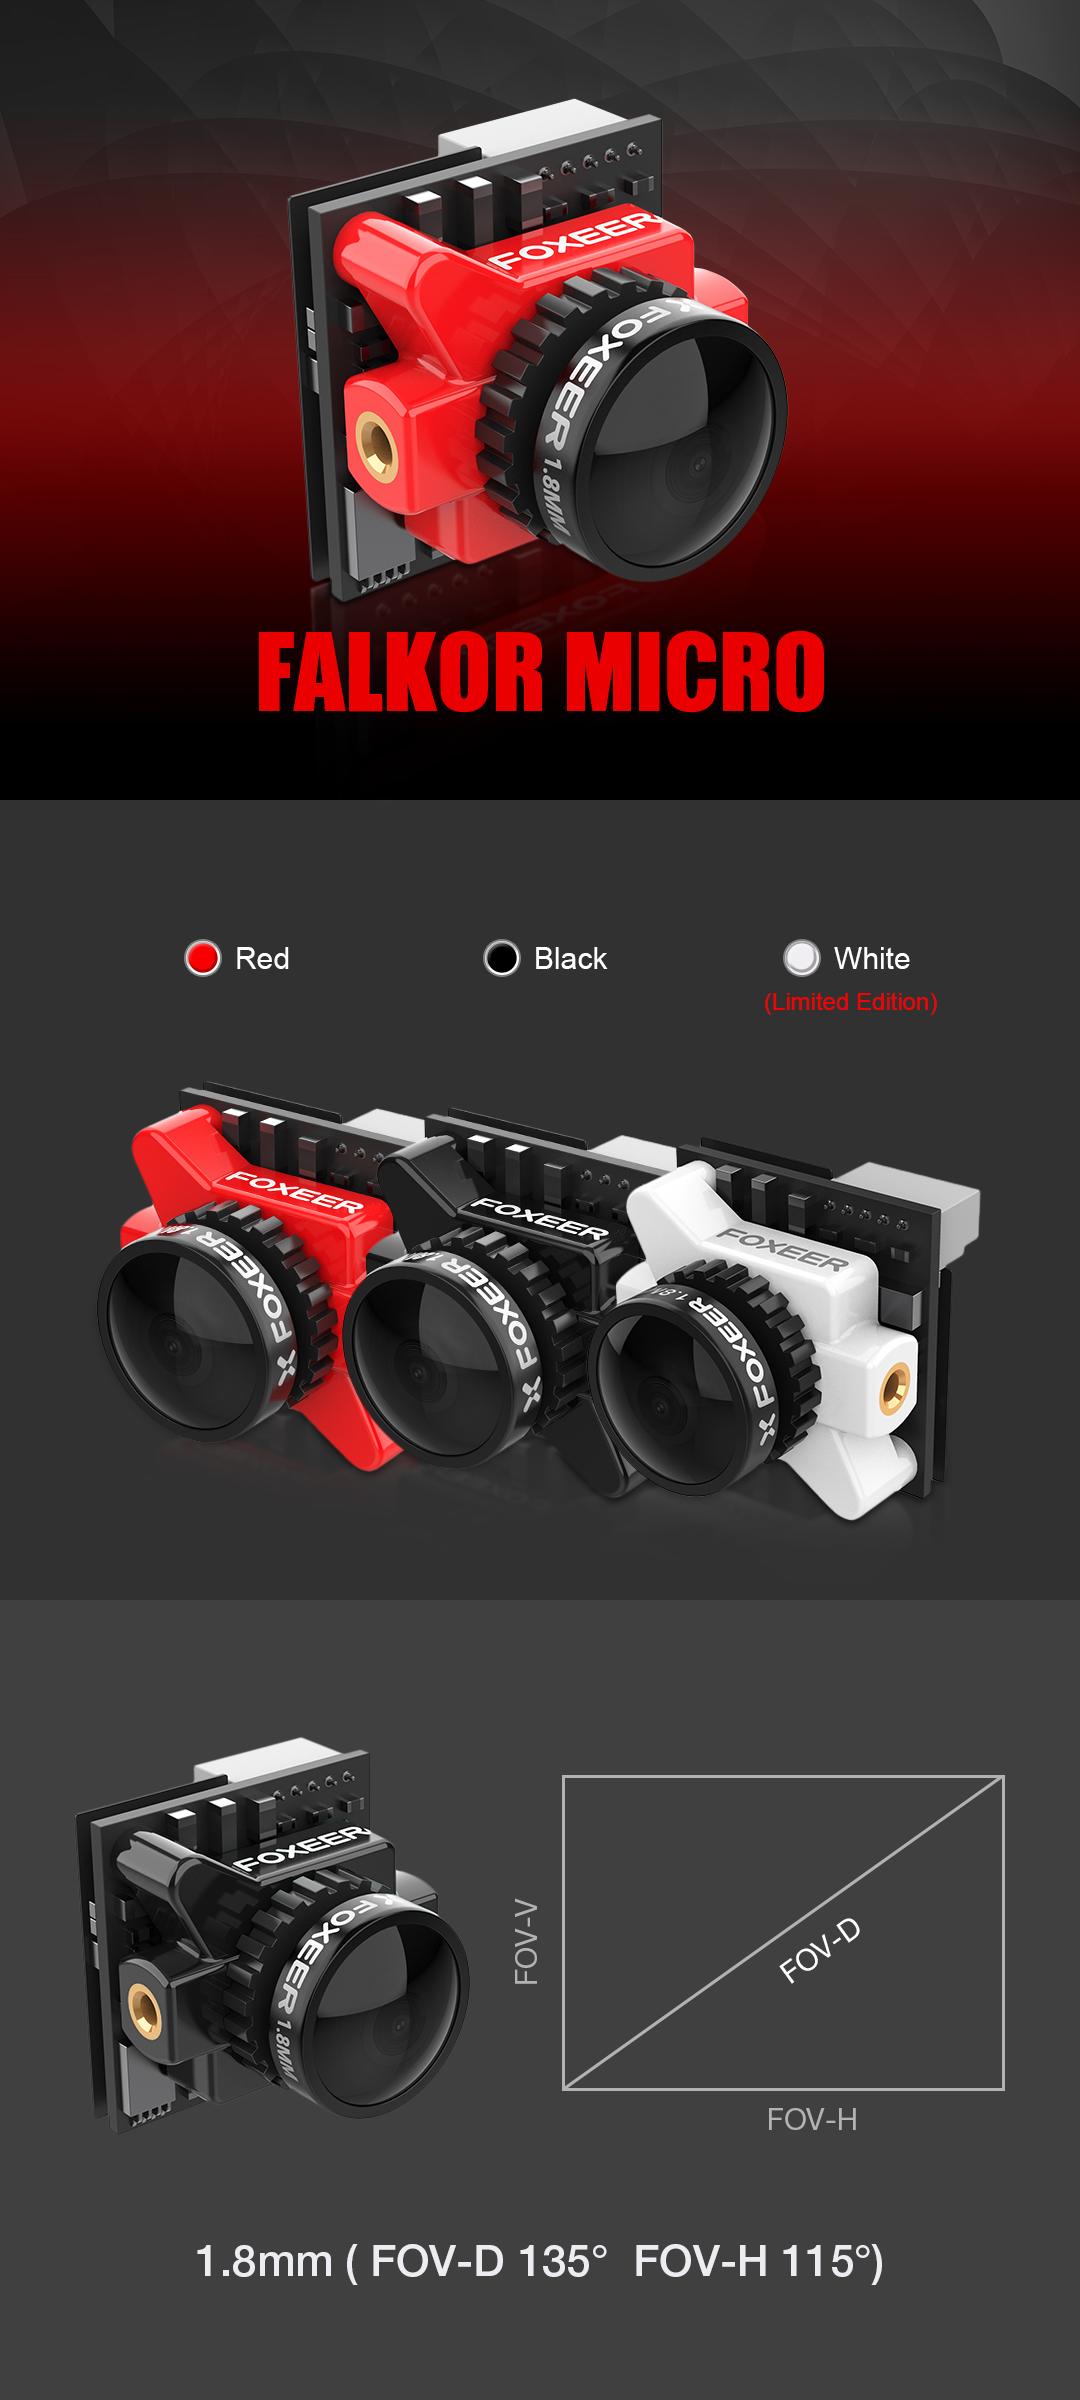 foxeer-micro-falkor-1200tvl-camera-16-9-4-3-pal-ntsc-switchable.jpg